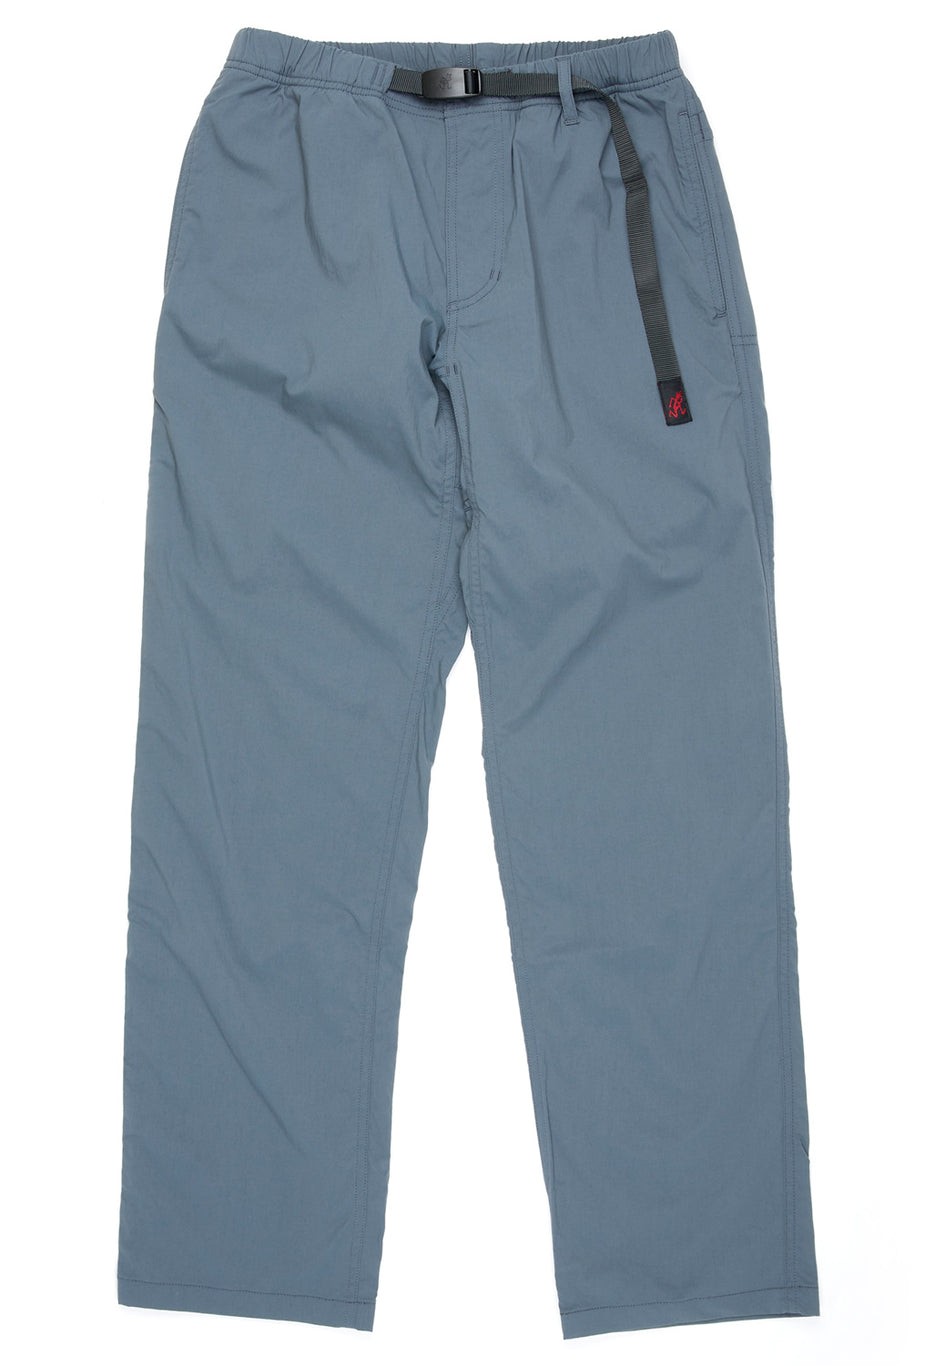 Gramicci Men's Softshell EQT Pants - Tech Blue